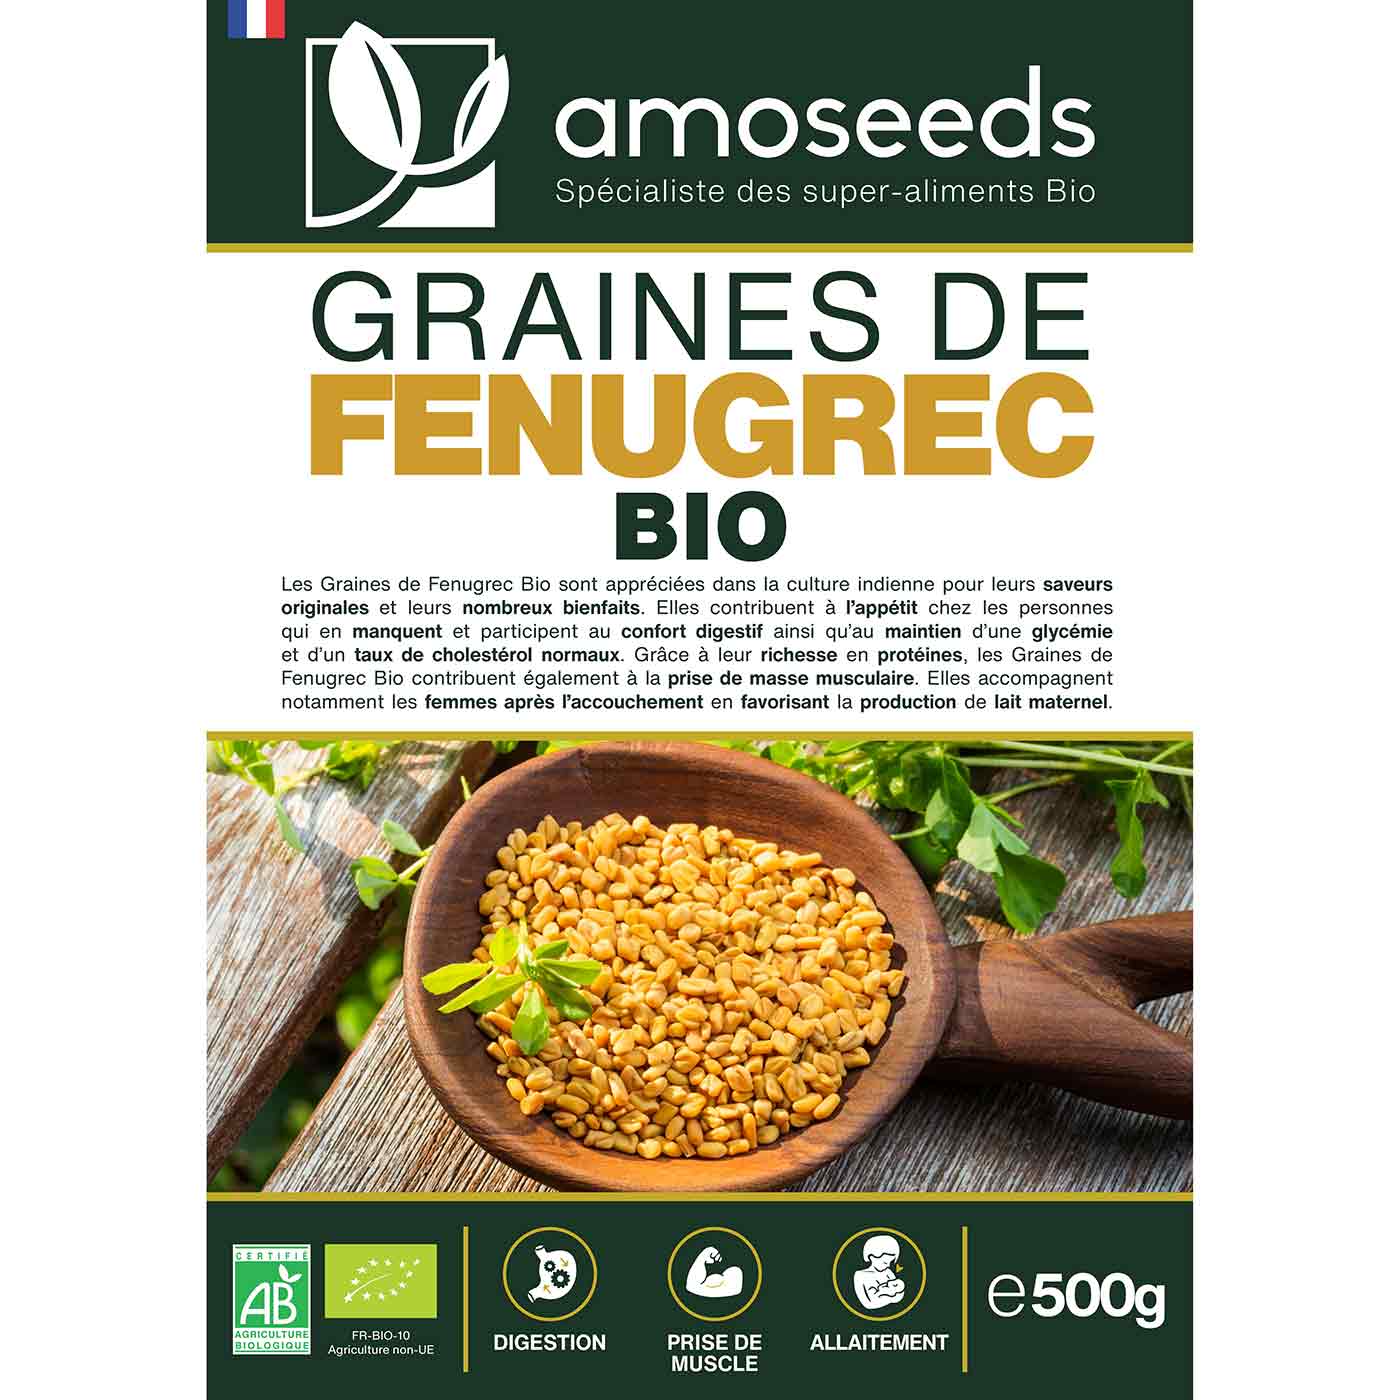 Graines de fenugrec bio amoseeds specialiste des super aliments Bio